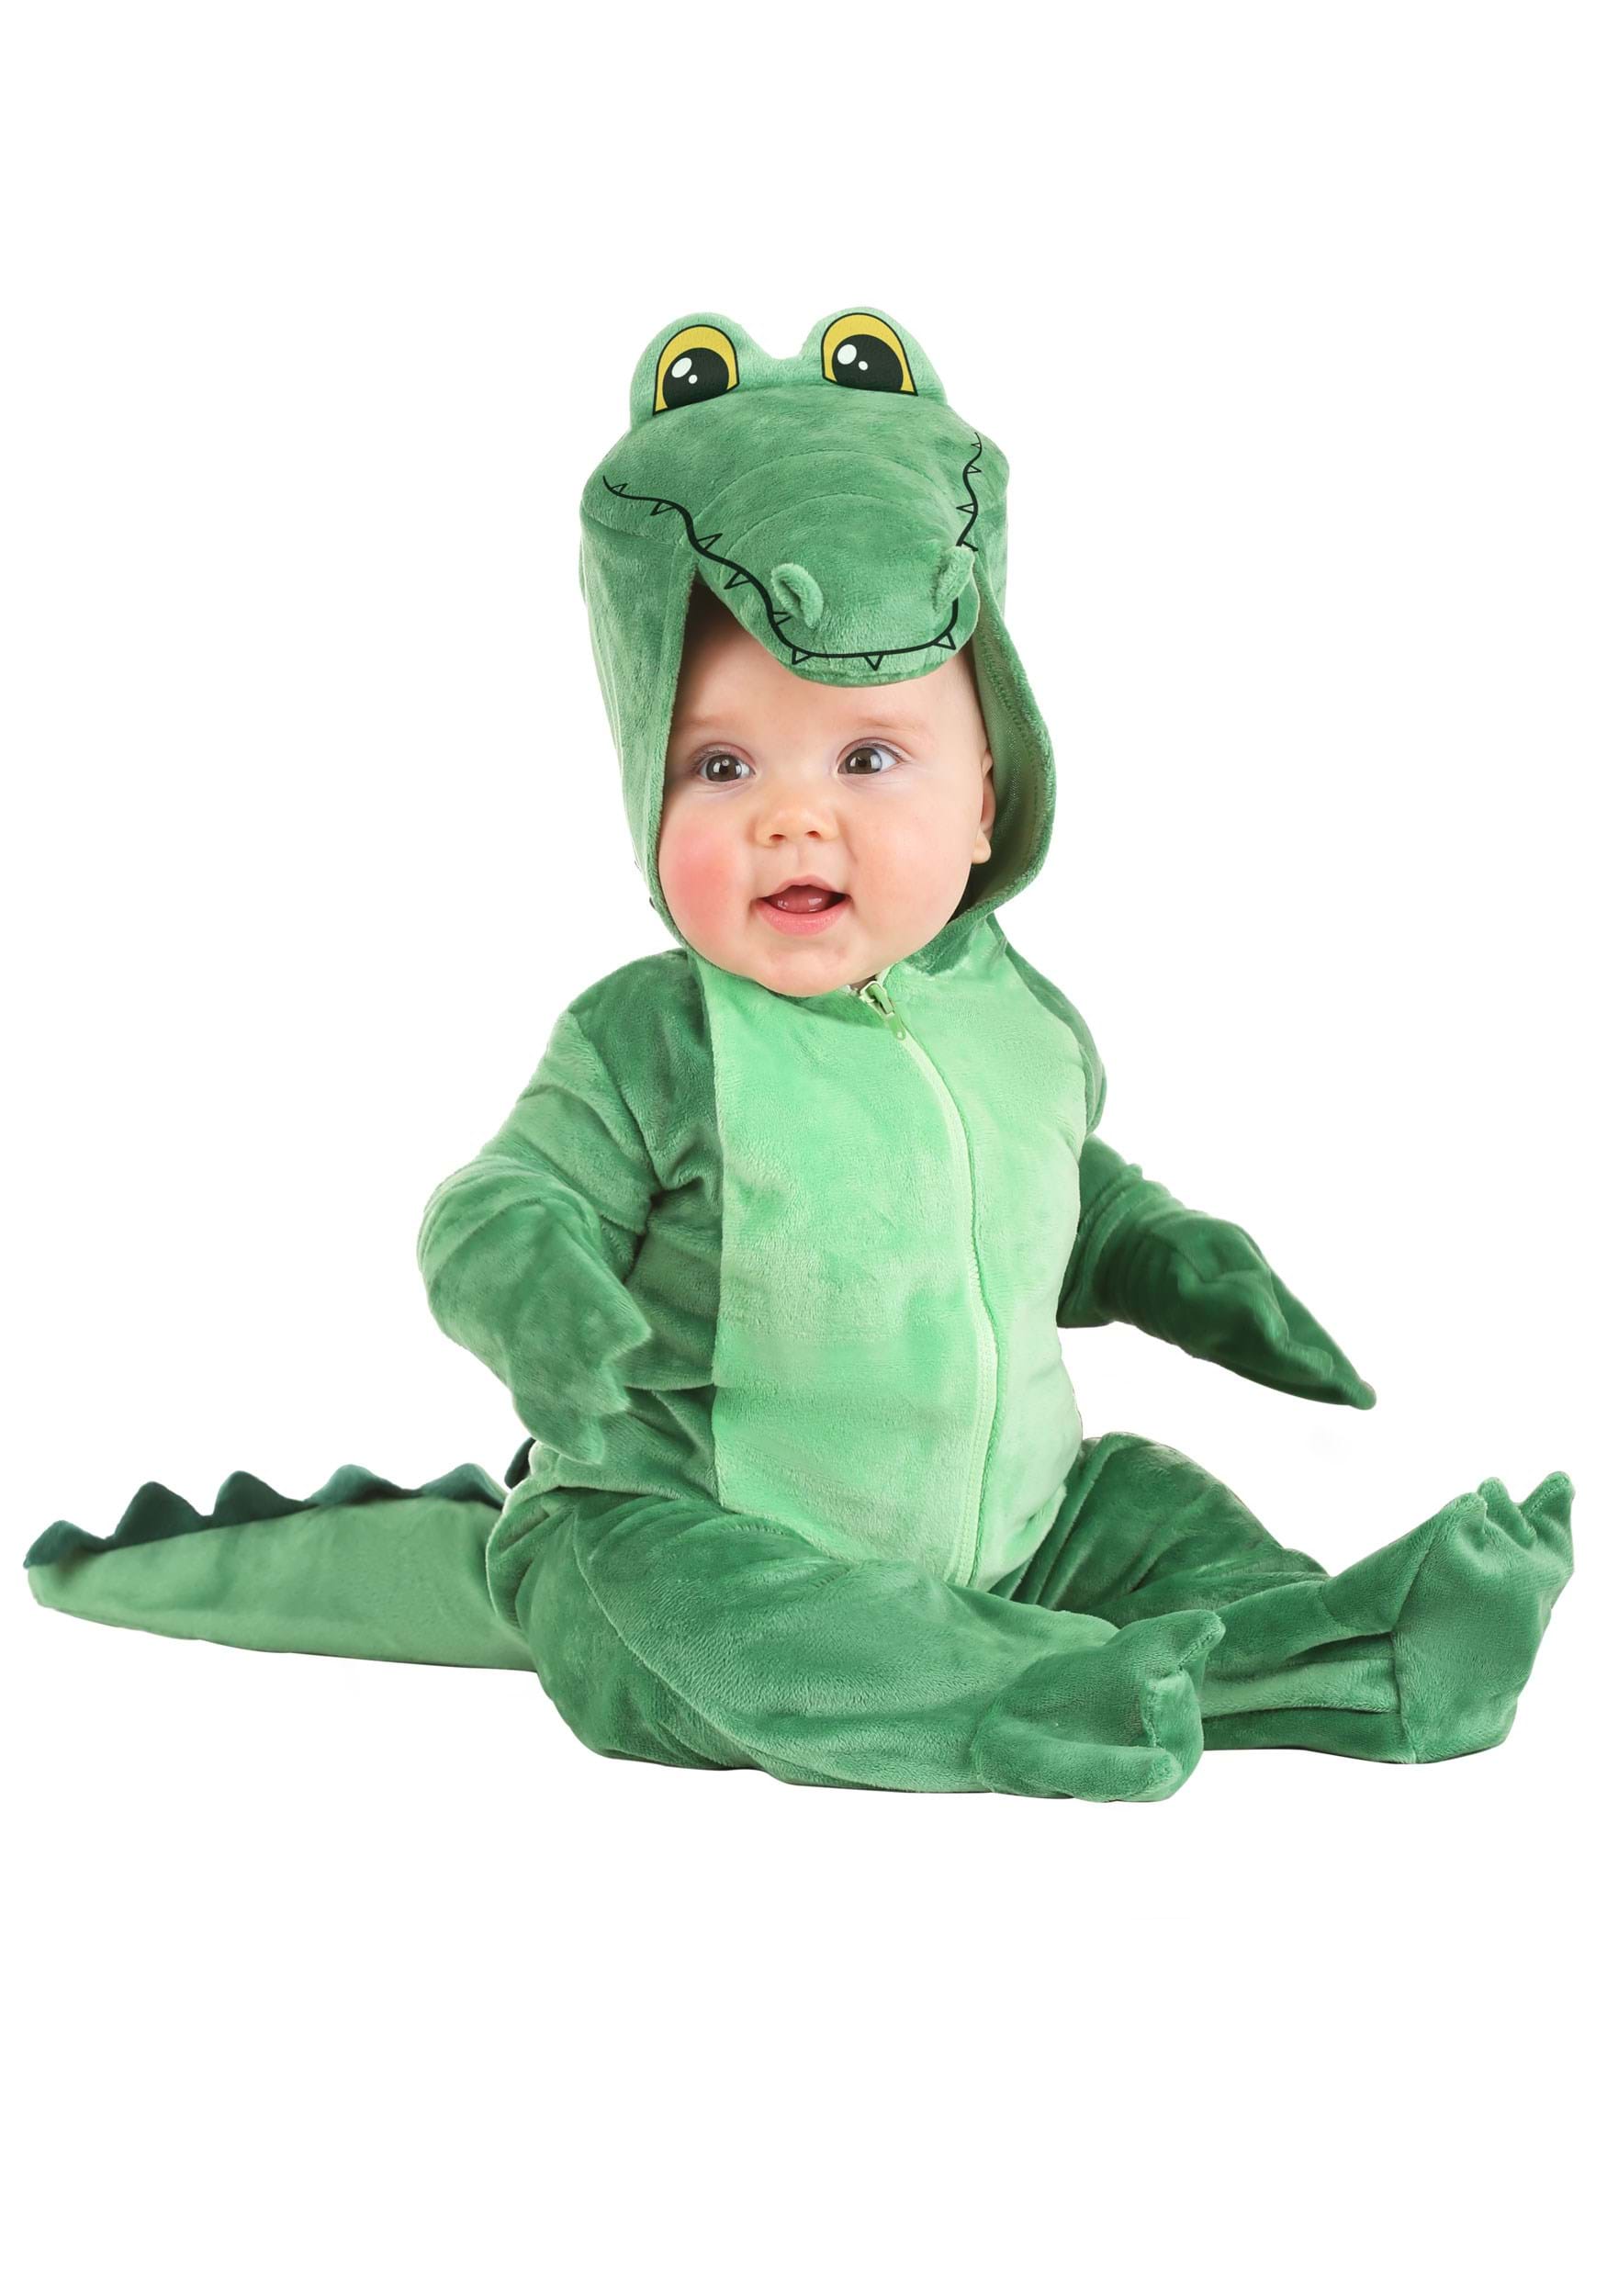 Cute Rascals® Toddler Clothes Cajun Alligator Funny Louisiana